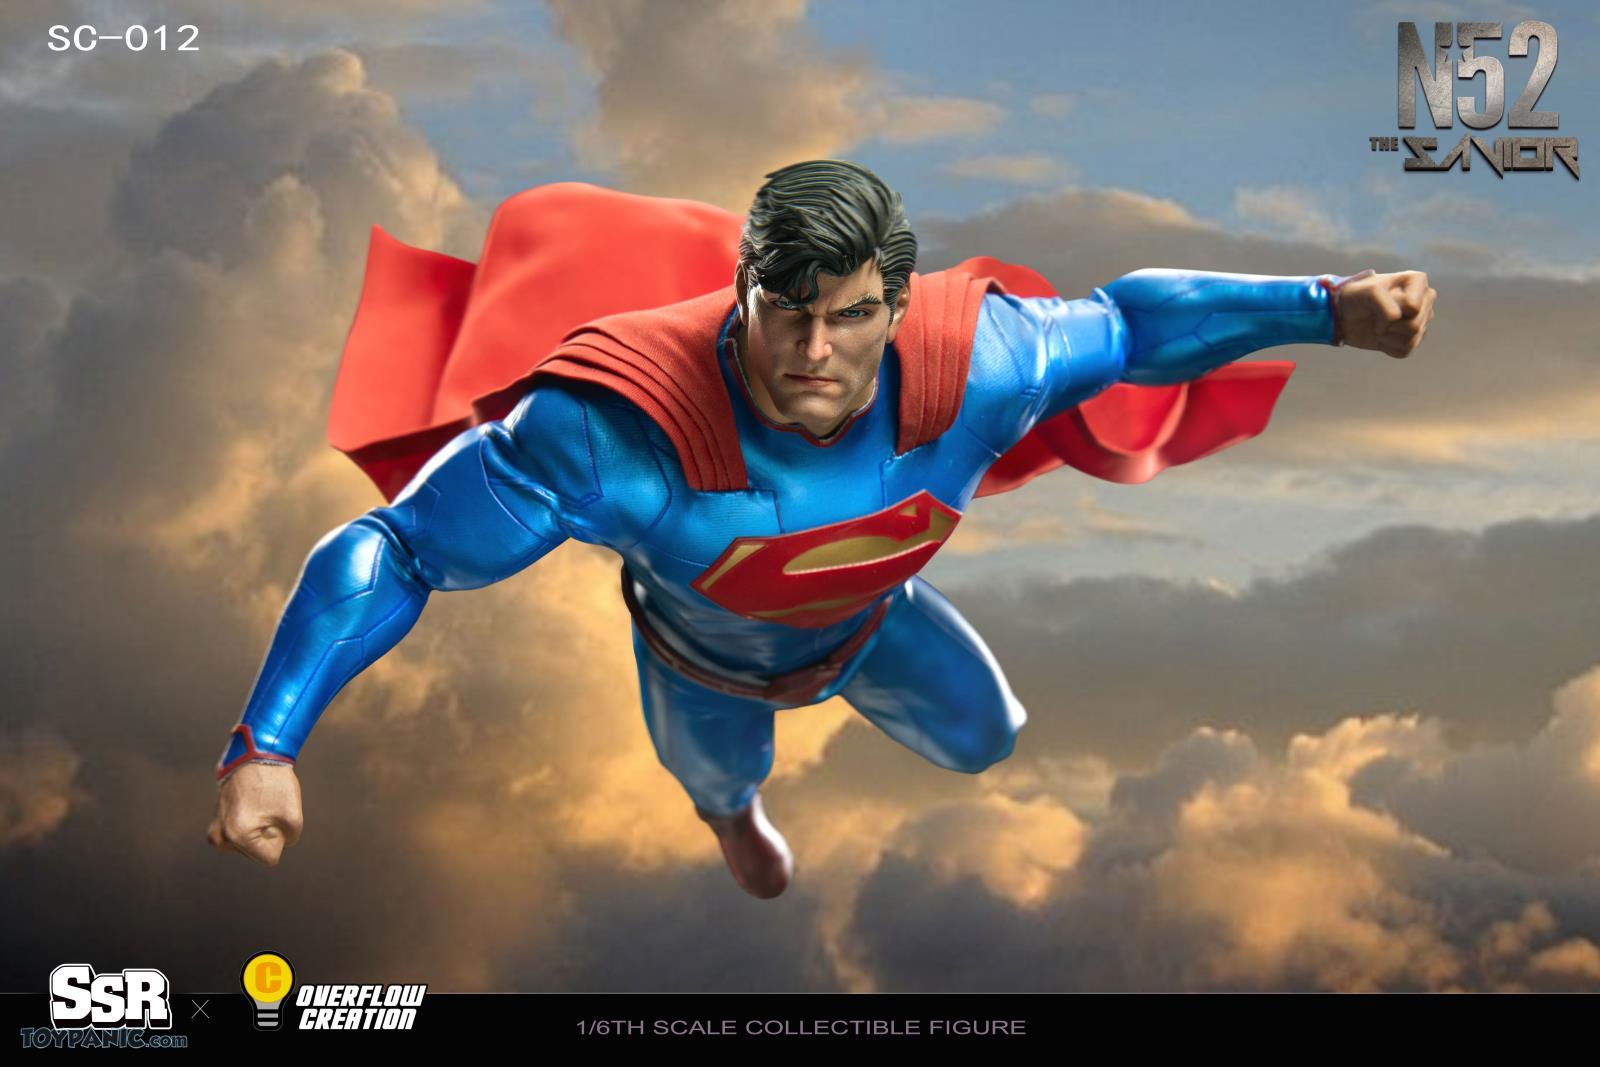 Superhero - NEW PRODUCT: SSR Studio SSC-012 1/6 Scale N52 The Savior 2612024123600PM_3289640